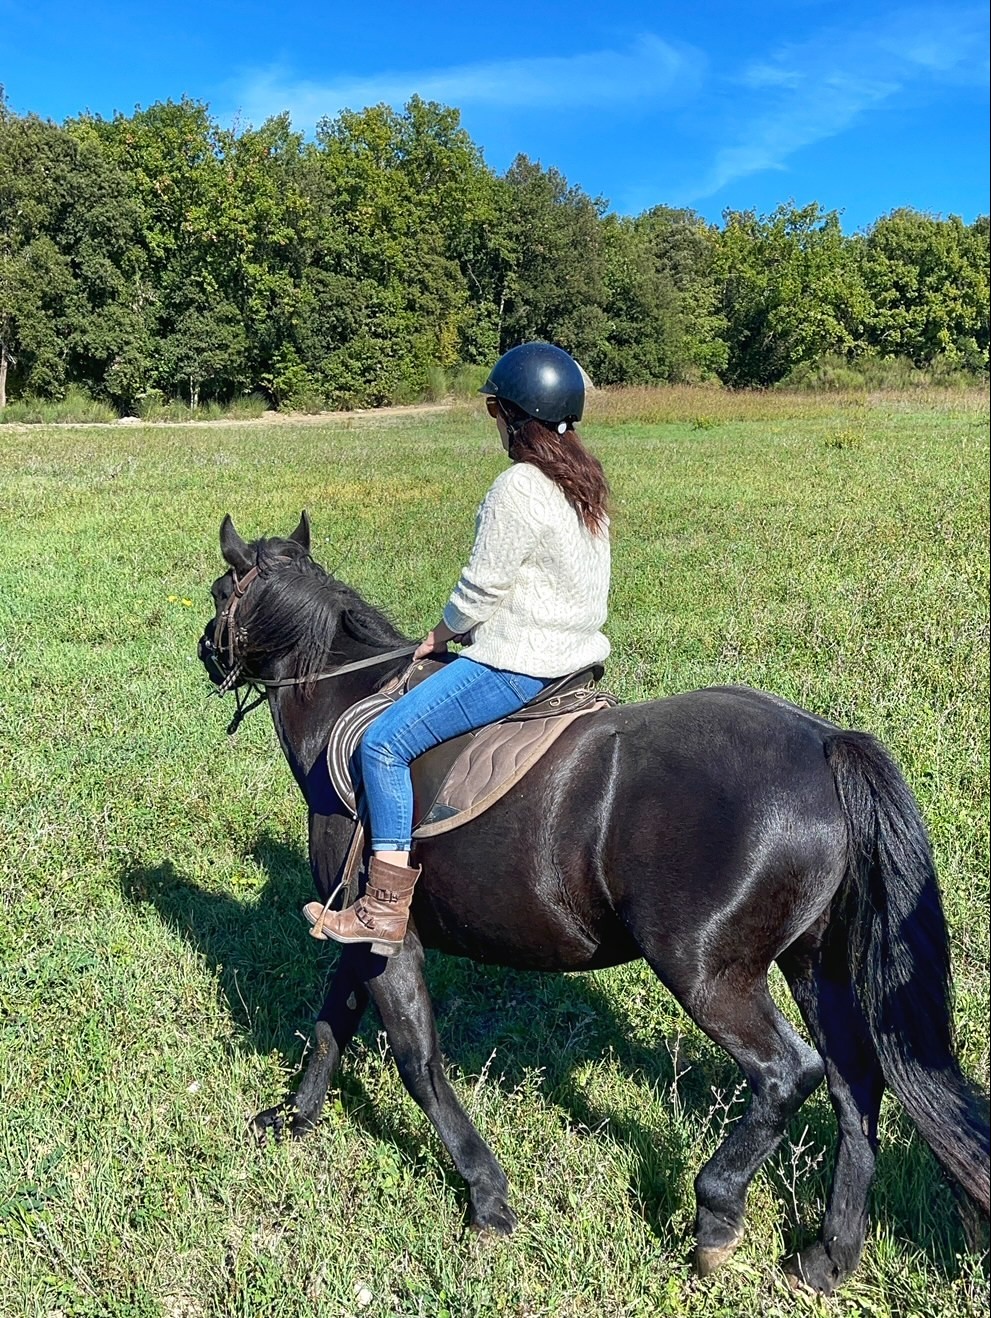 horseback riding in tuscany, the-alyst.com